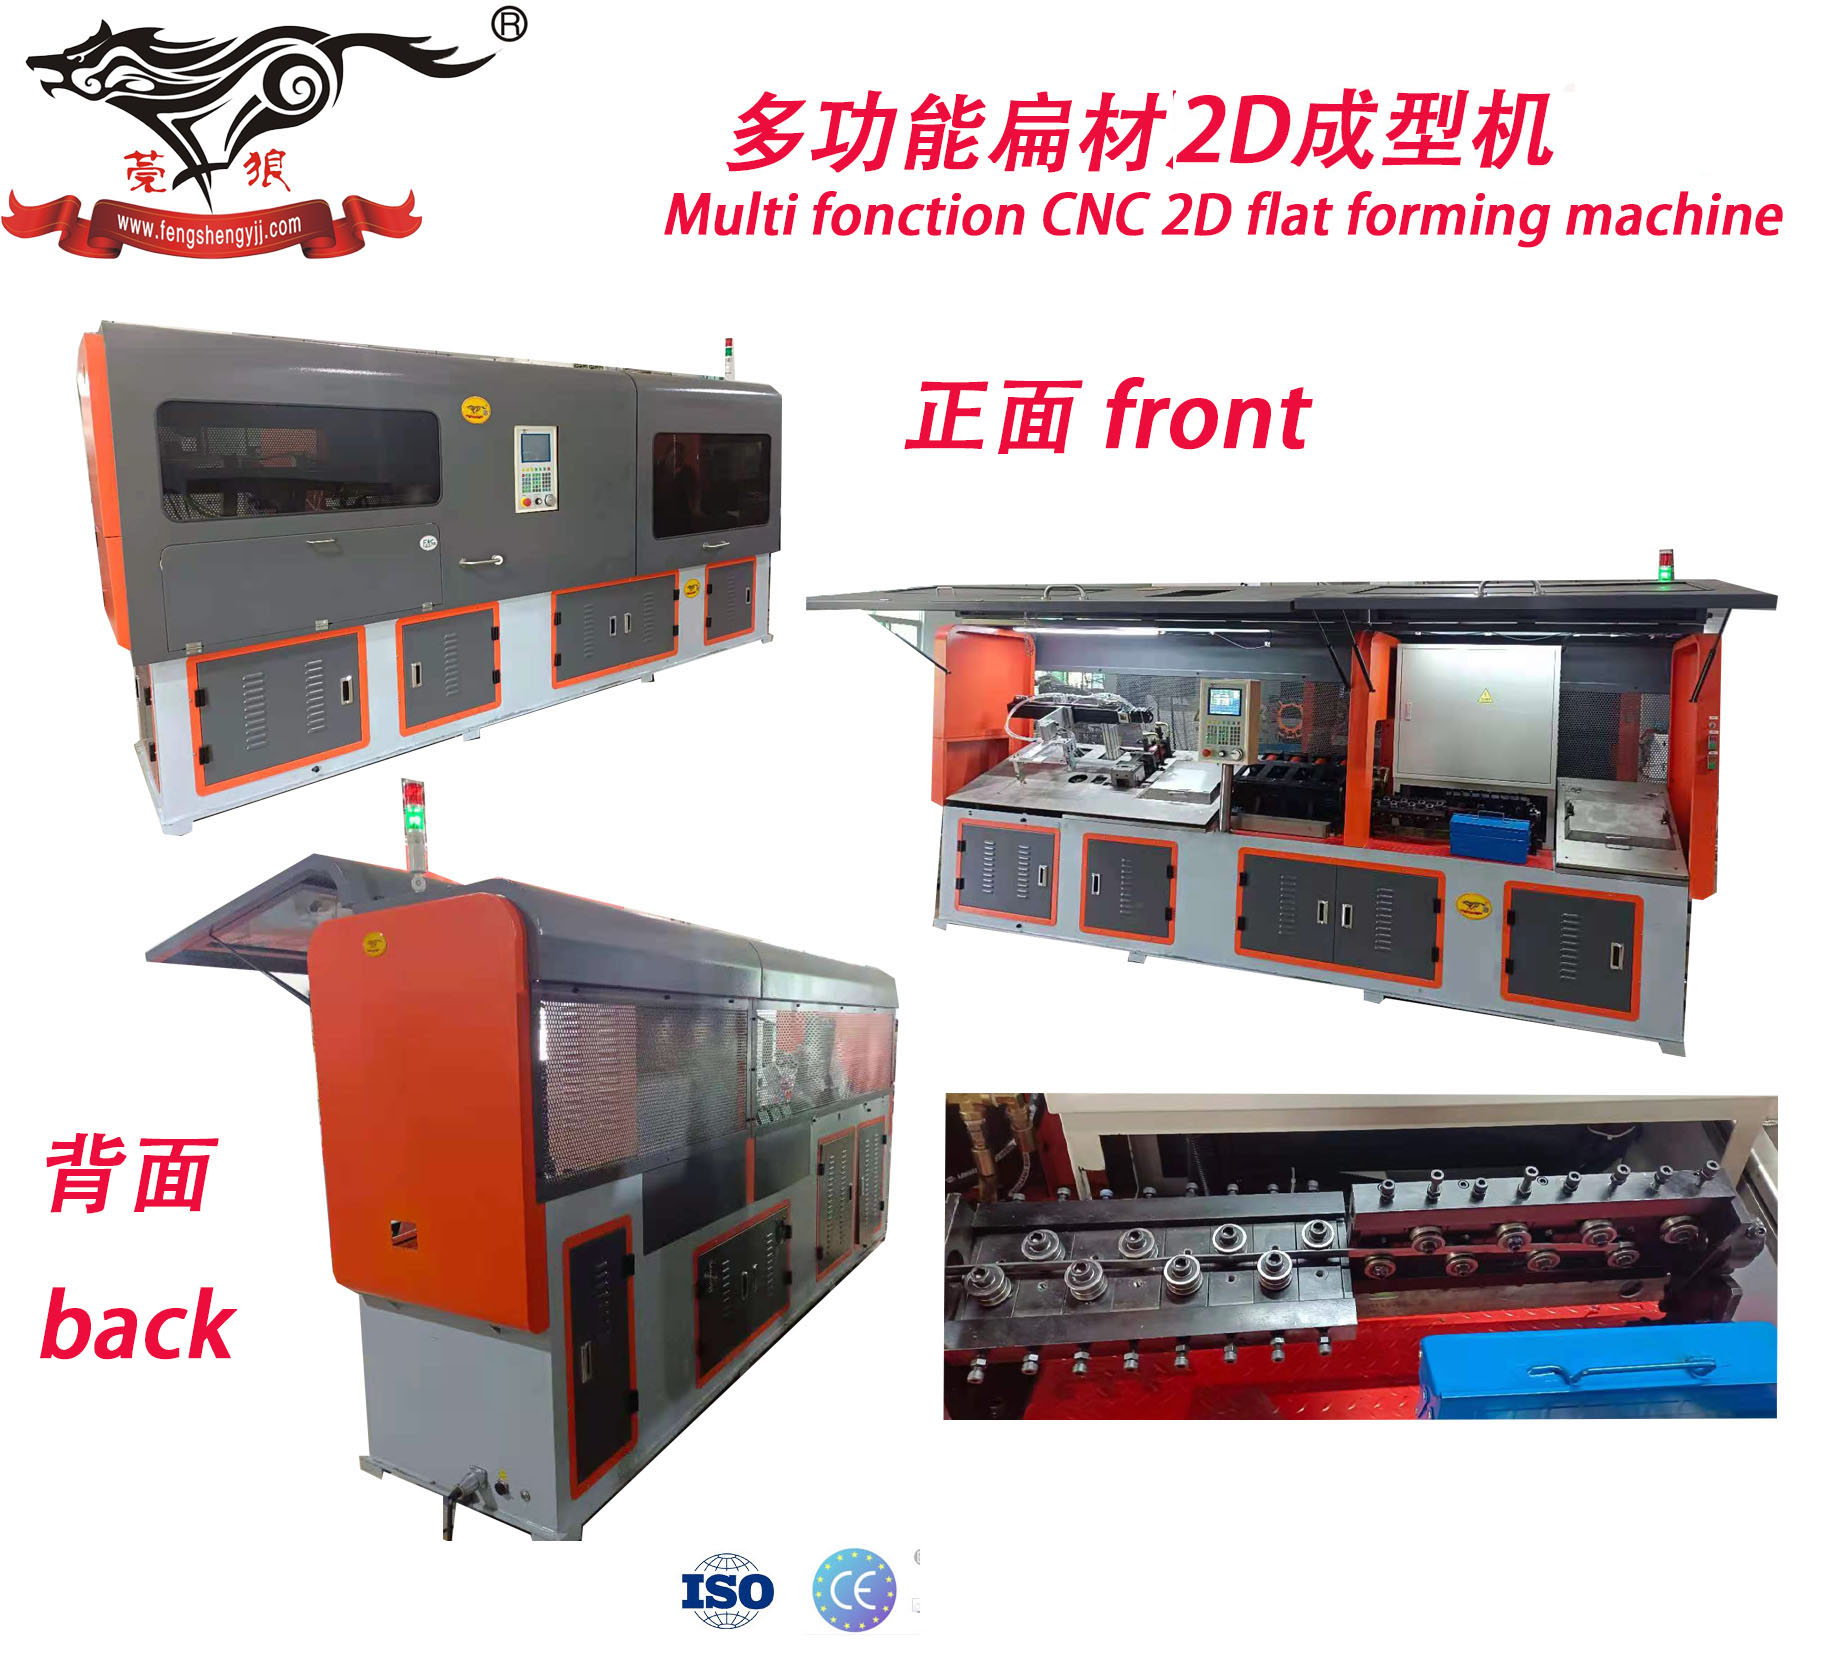 多功能扁材2D成型机multi function CNC 2Dflat forming machine.jpg